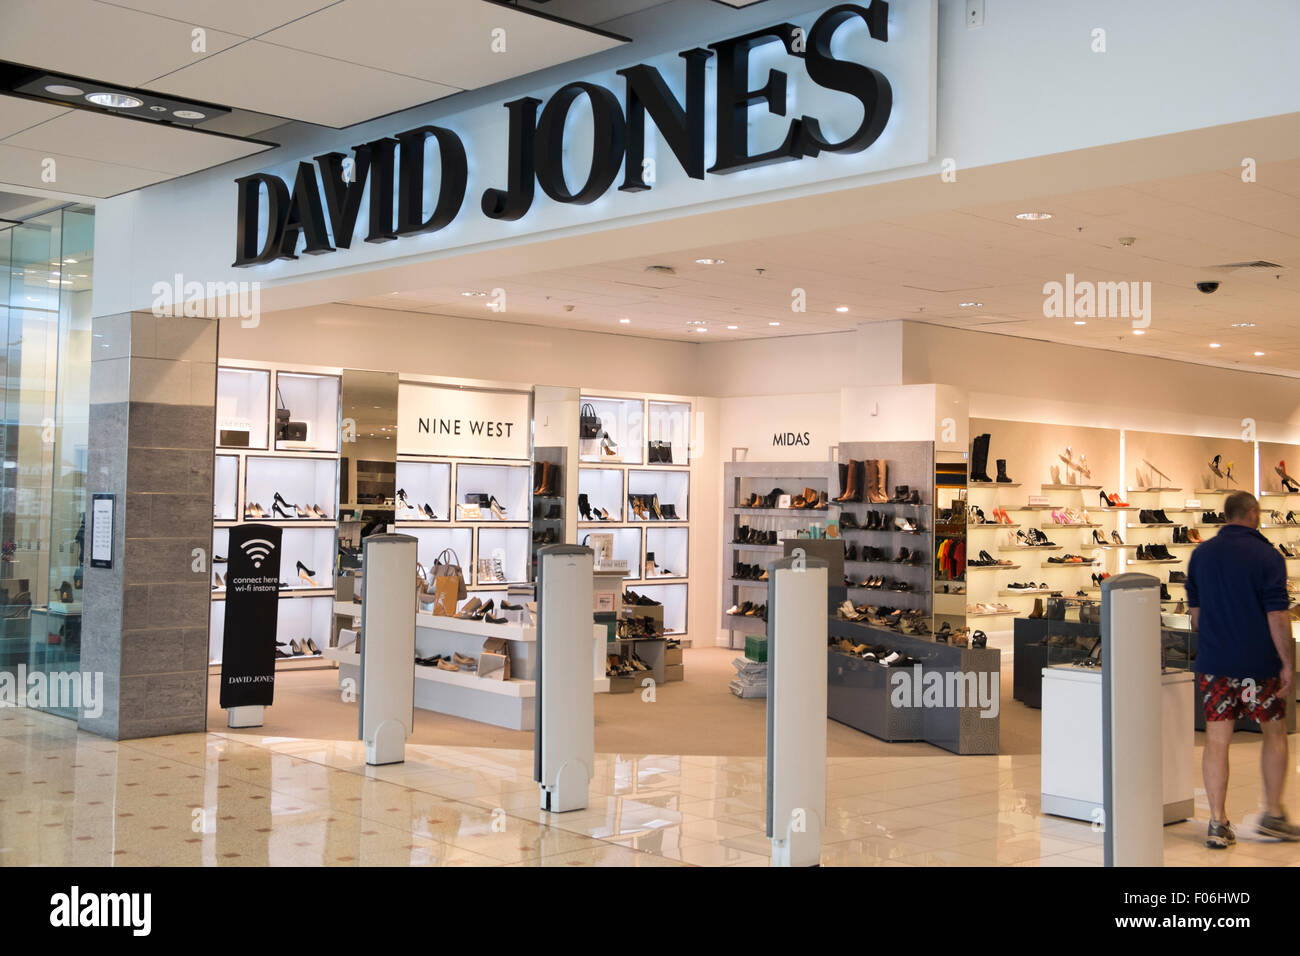 David Jones department store in Sydney,Australia Stock Photo - Alamy